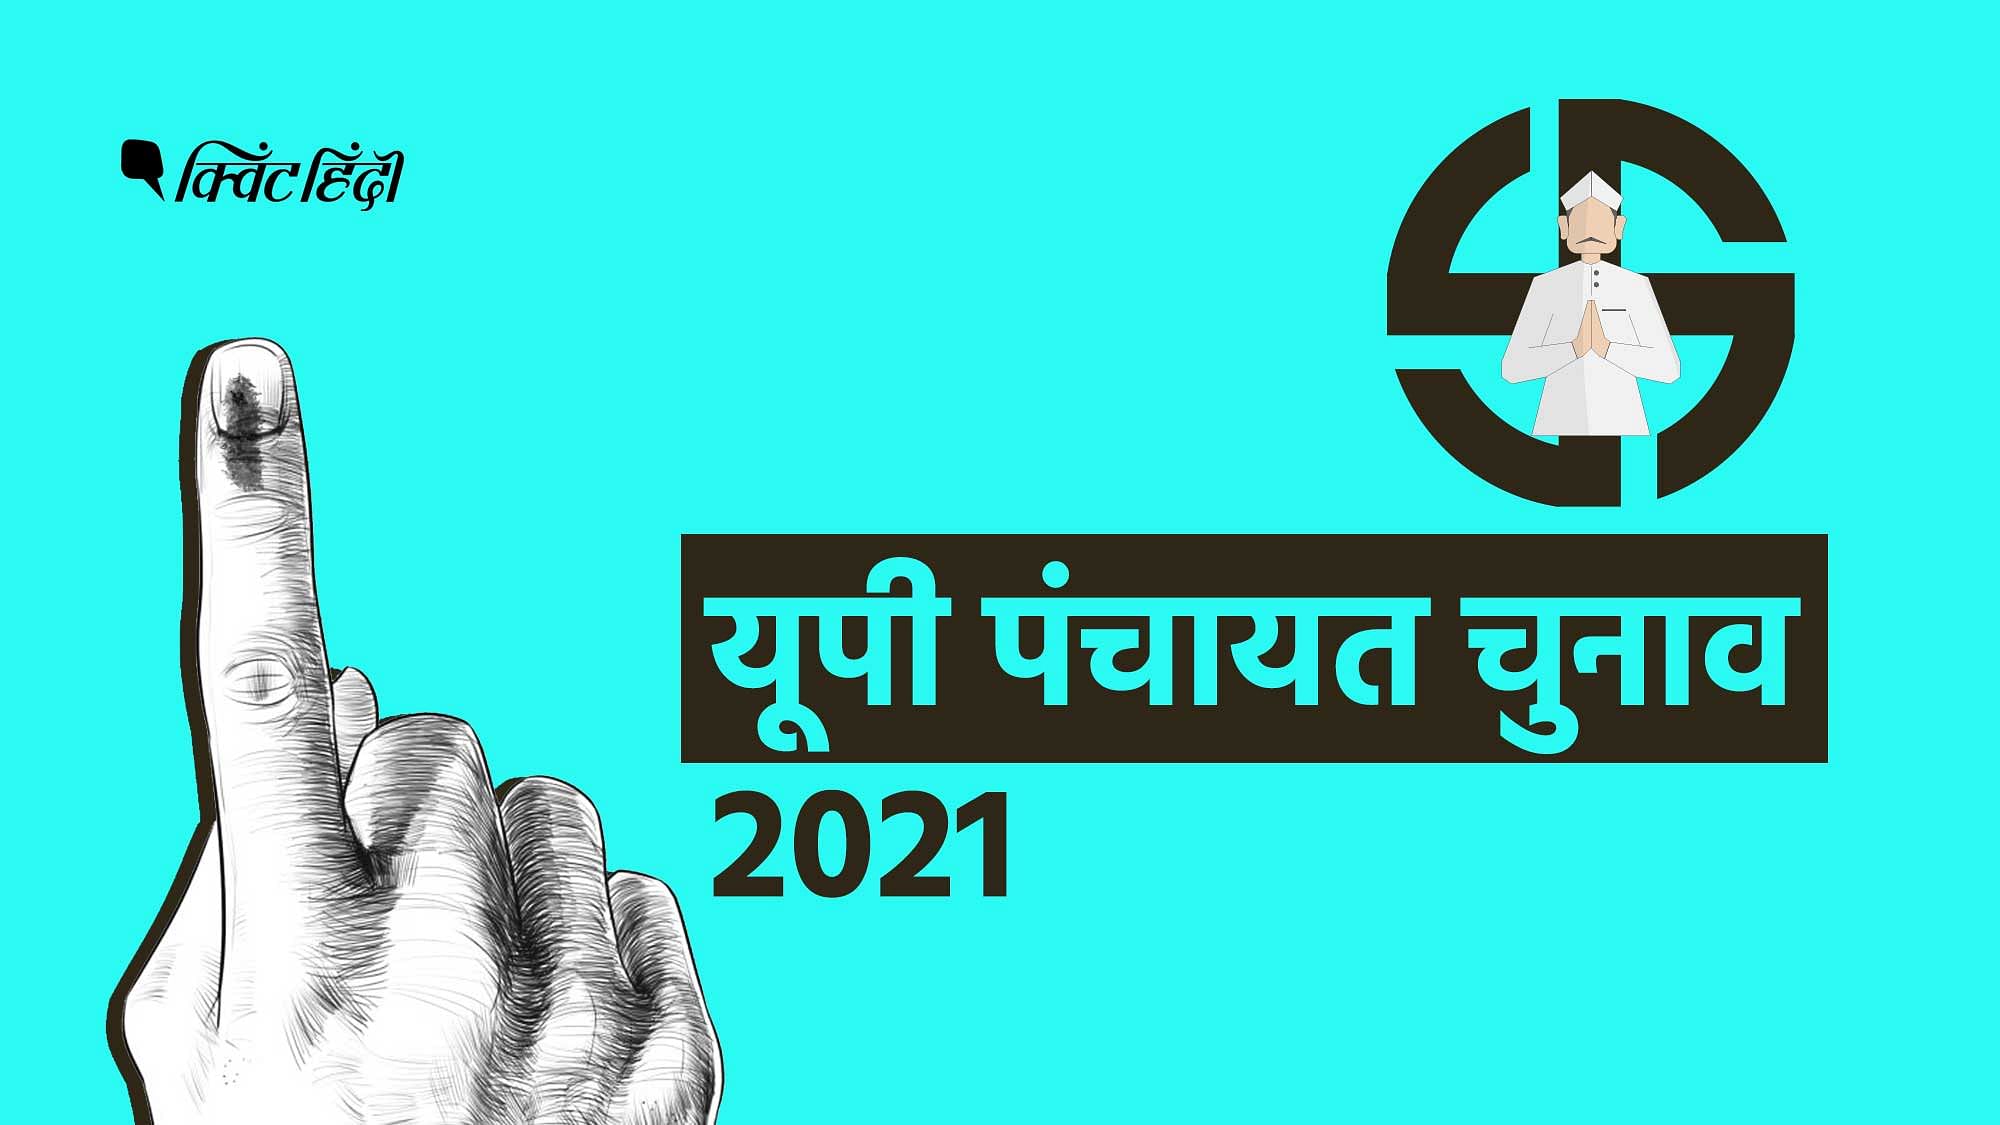 UP panchayat election 2021: यूपी पंचायत चुनाव 2021